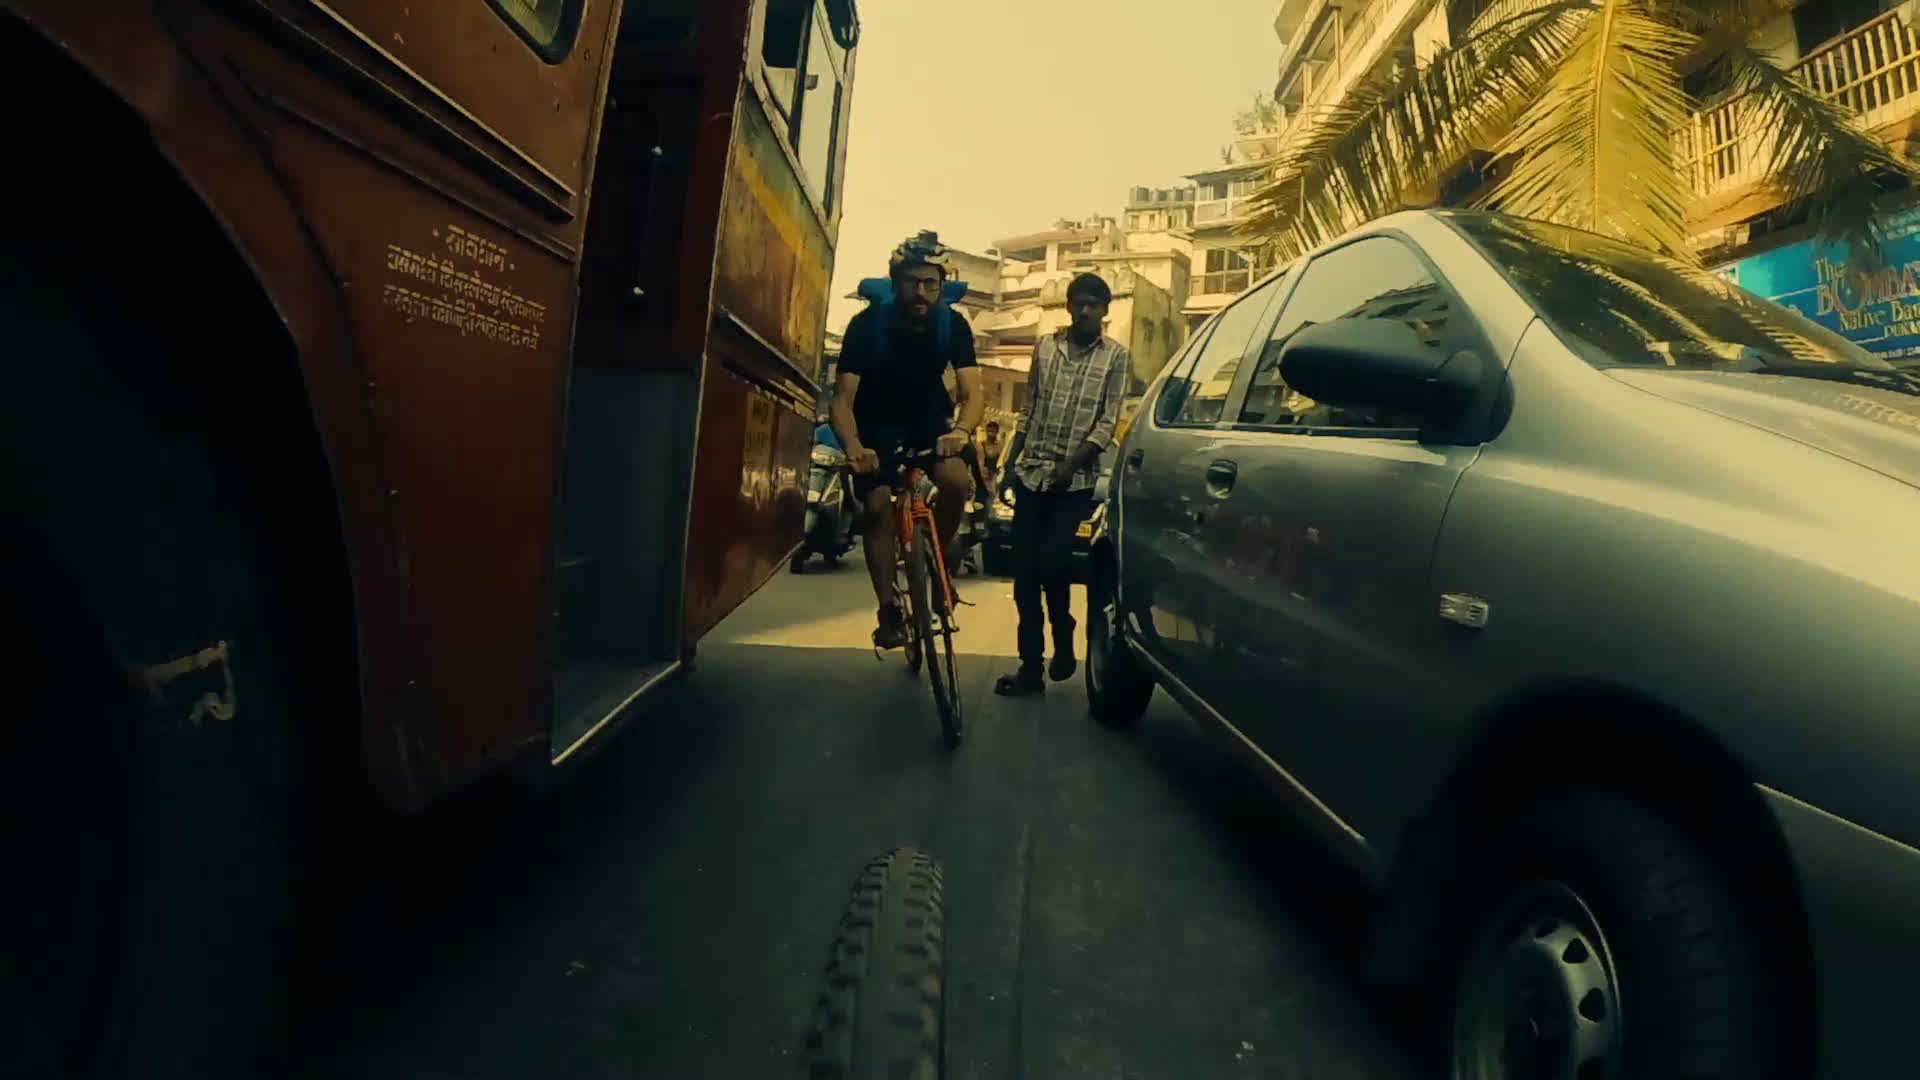 Bike (Un)Friendly: The Mumbai Mess